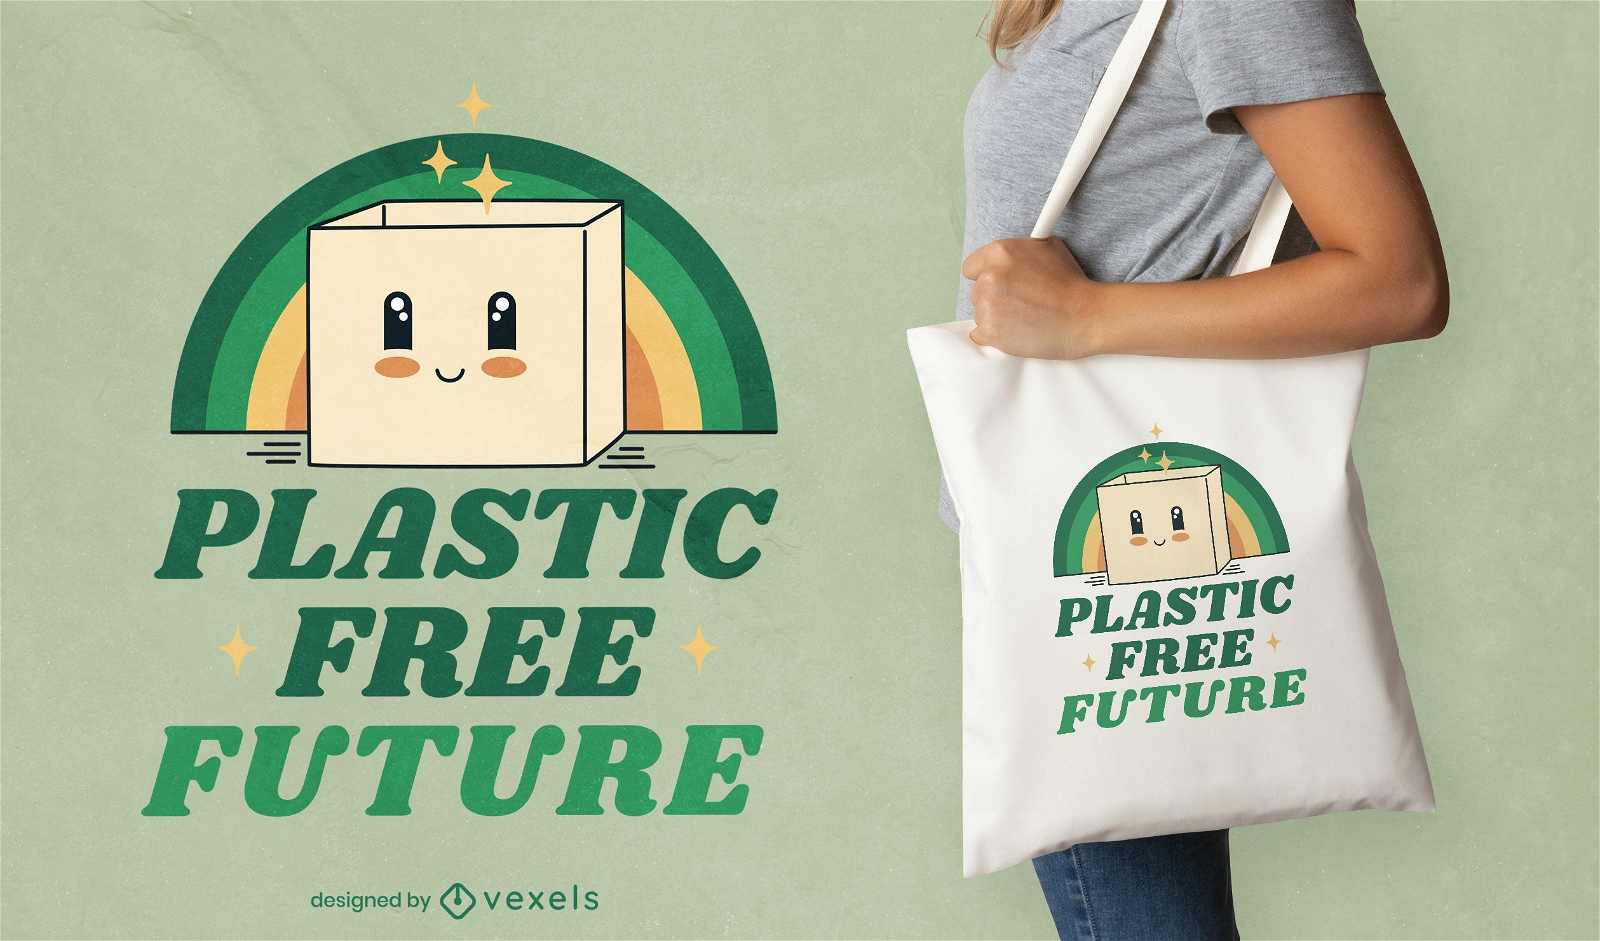 Plastic free future tote bag design